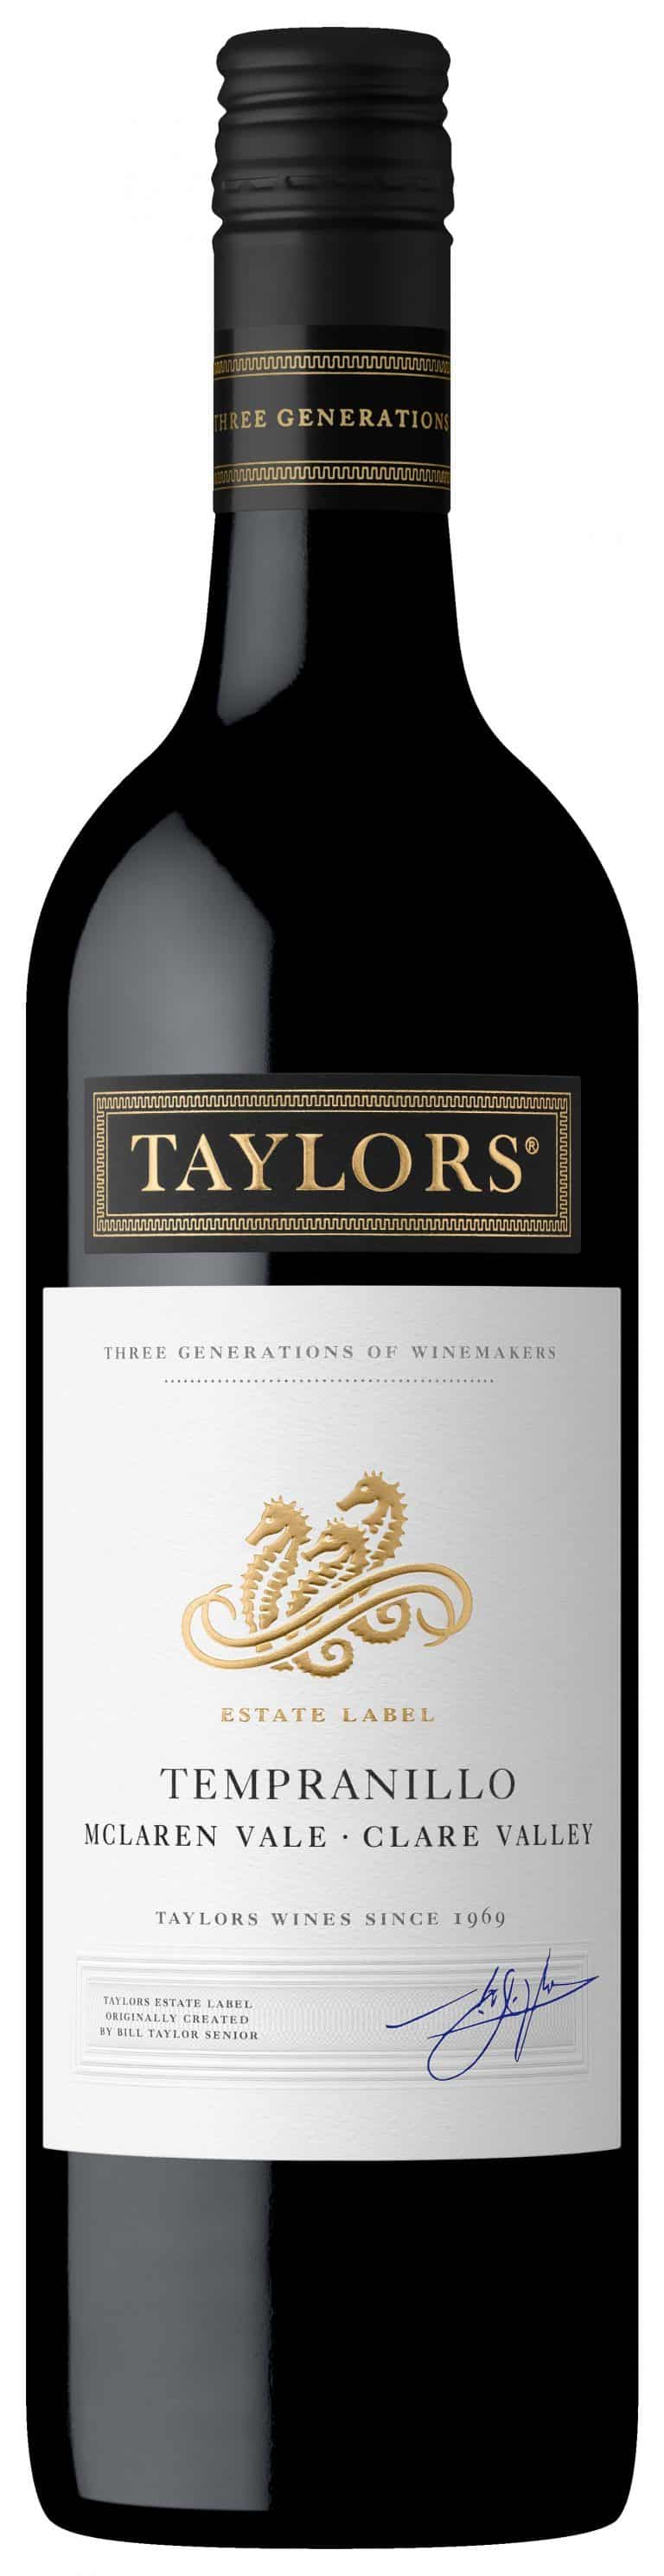 Taylors Estate Label Tempranillo